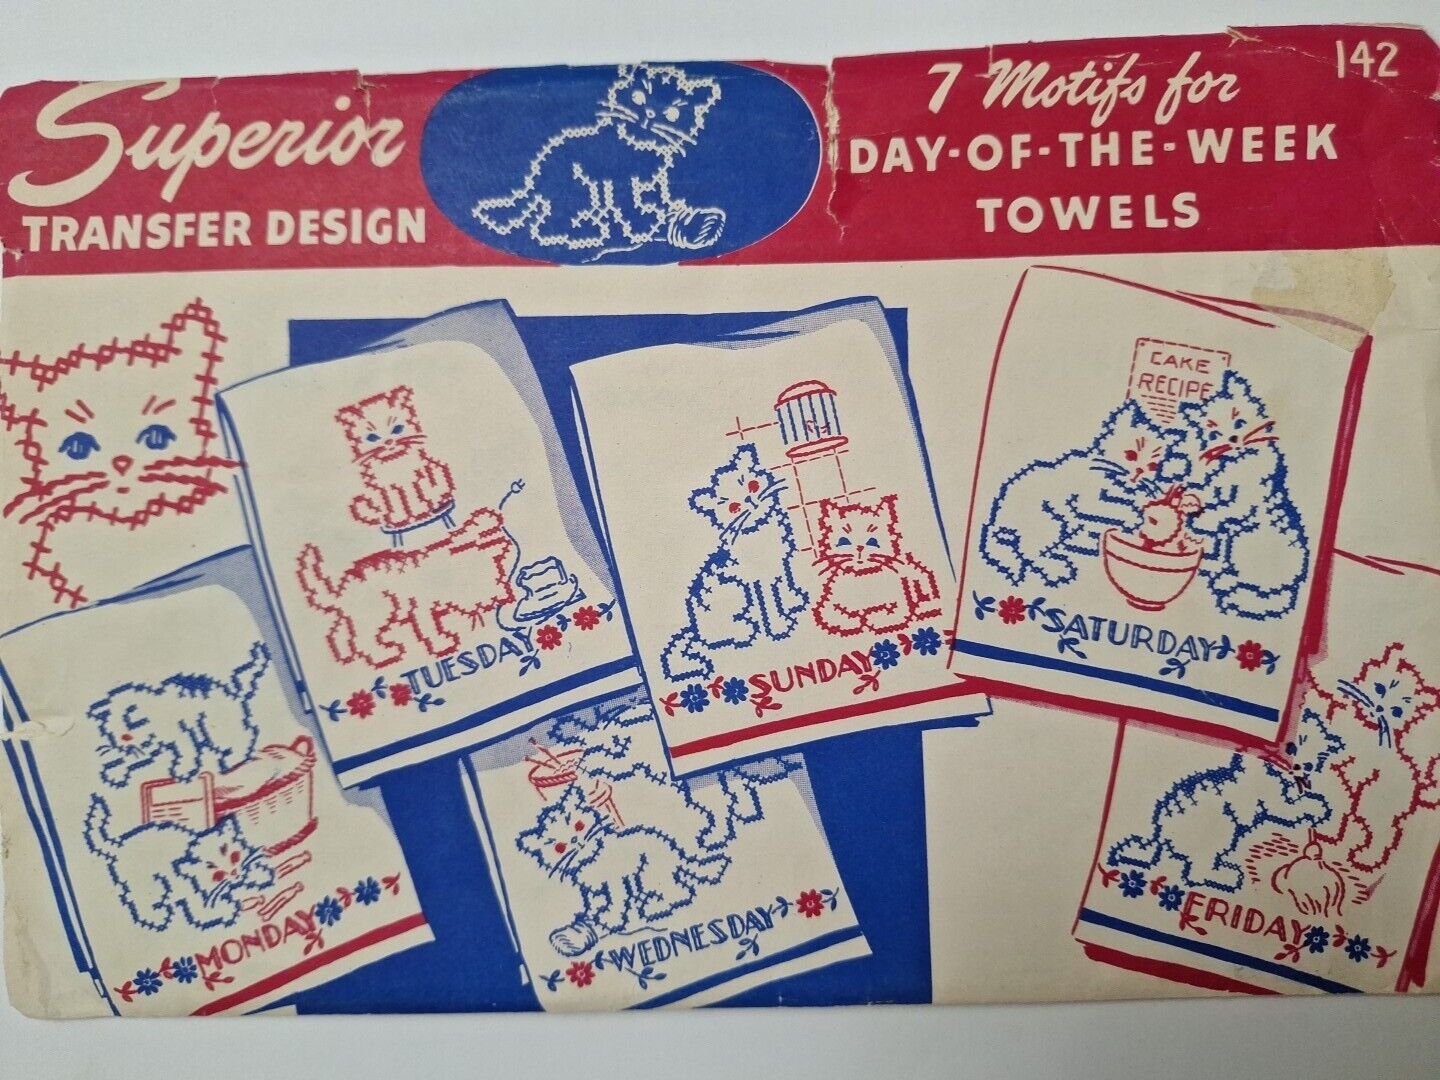 Cat Kitten Motifs Day Of Week Towels 142 Superior Transfer Design Pattern VTG UC